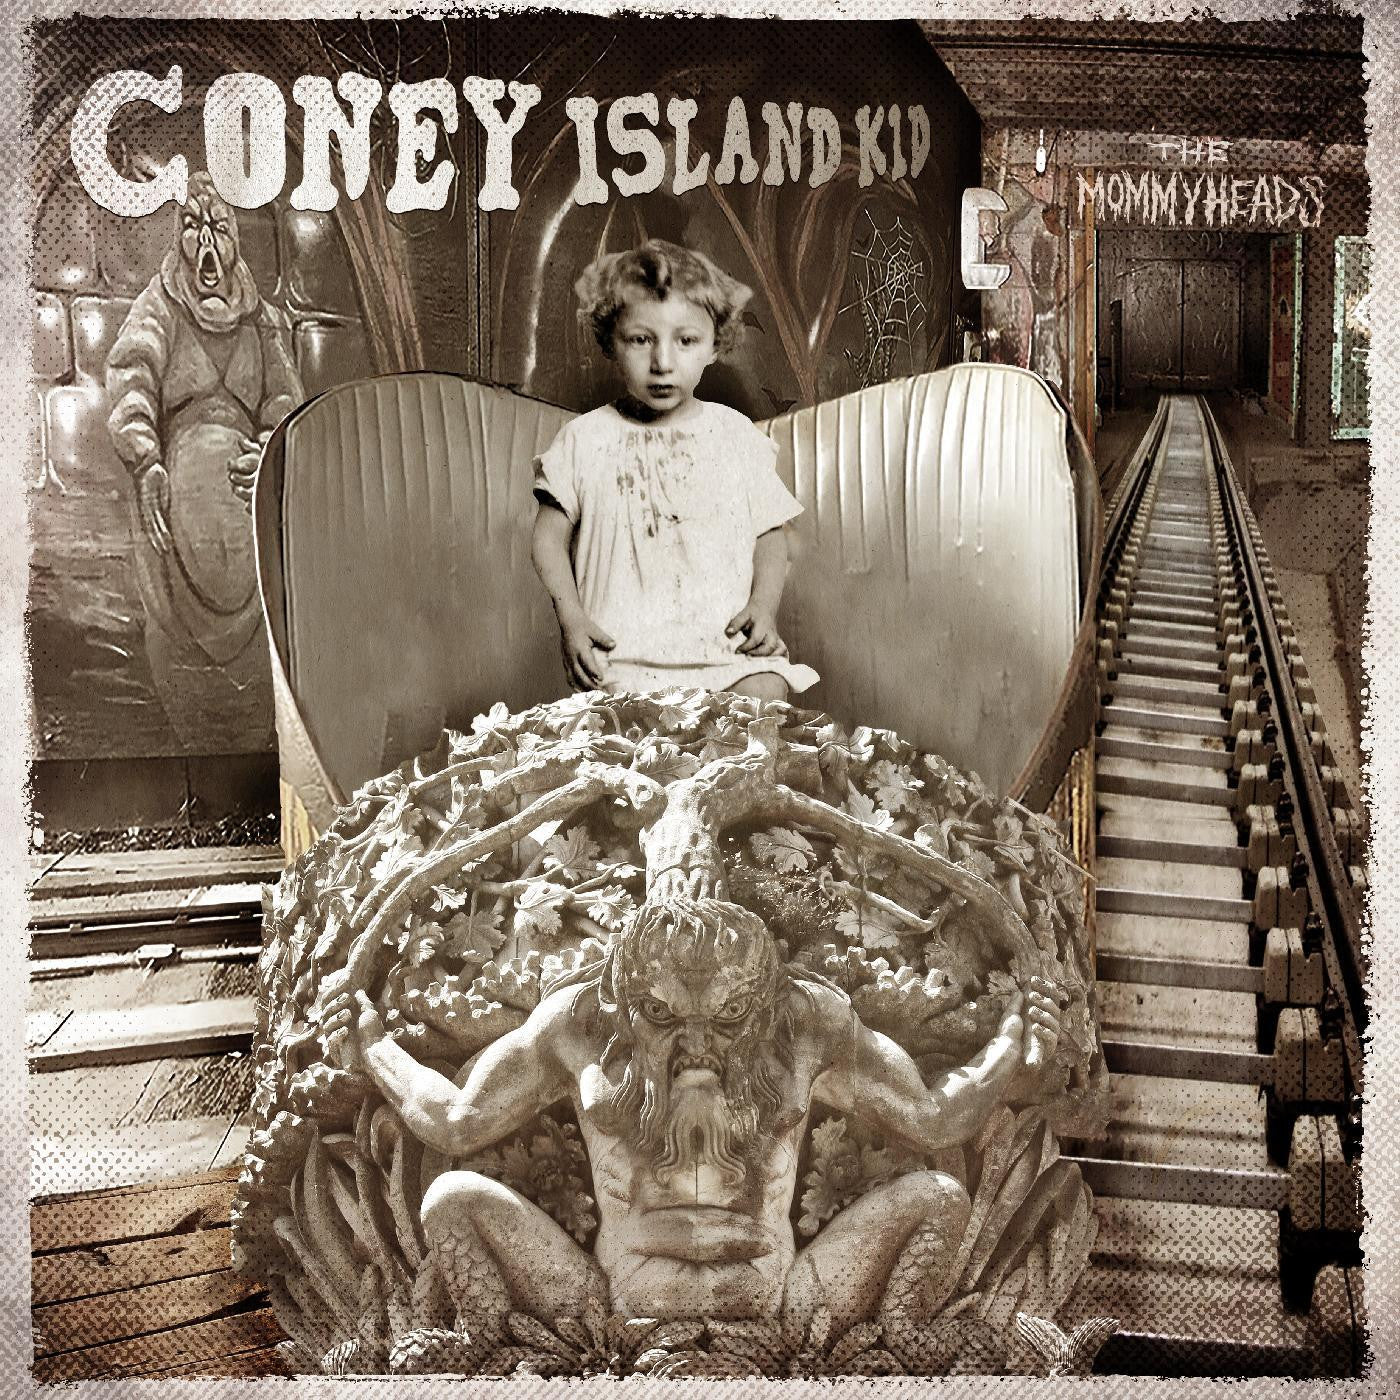 Mommyheads - Coney Island Kid (Vinyl LP)